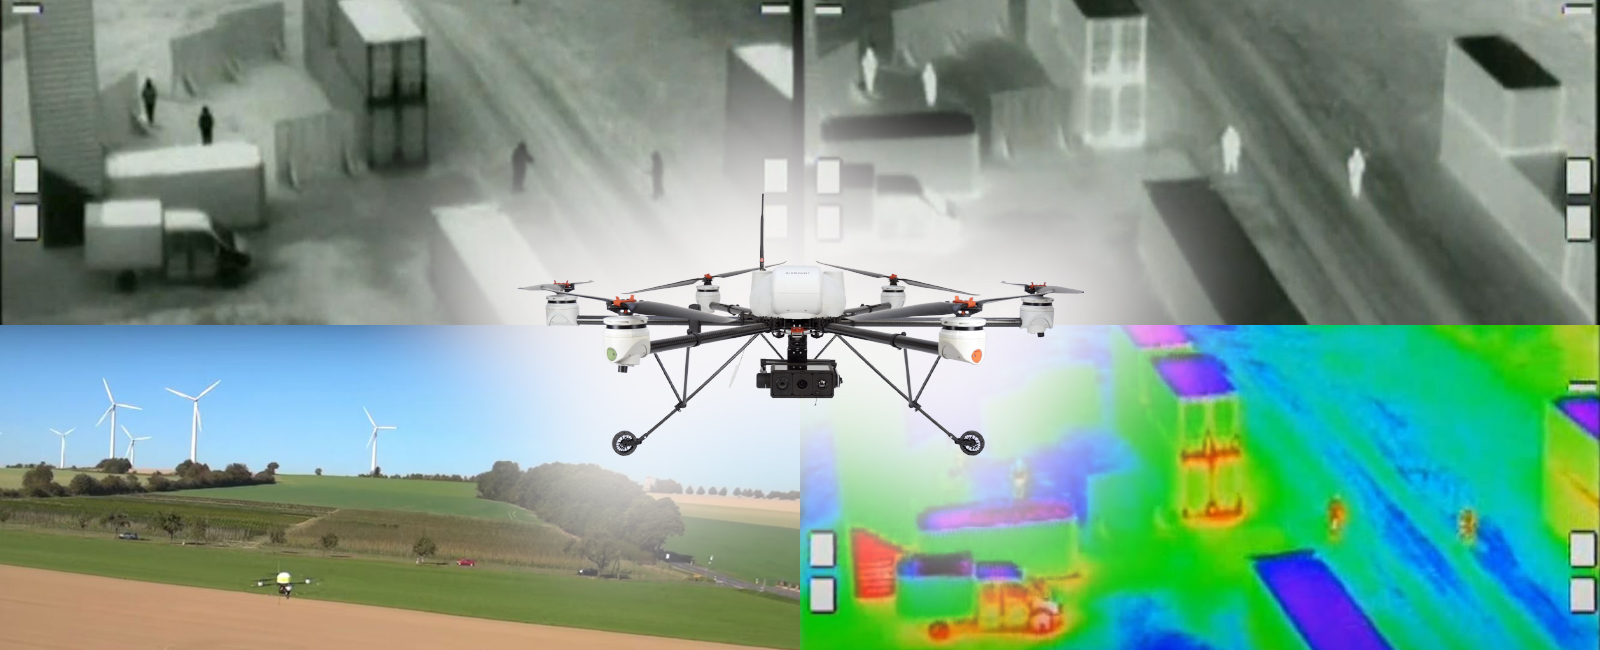 Bespilotni vazdušni sistemi (UAS) - Dron